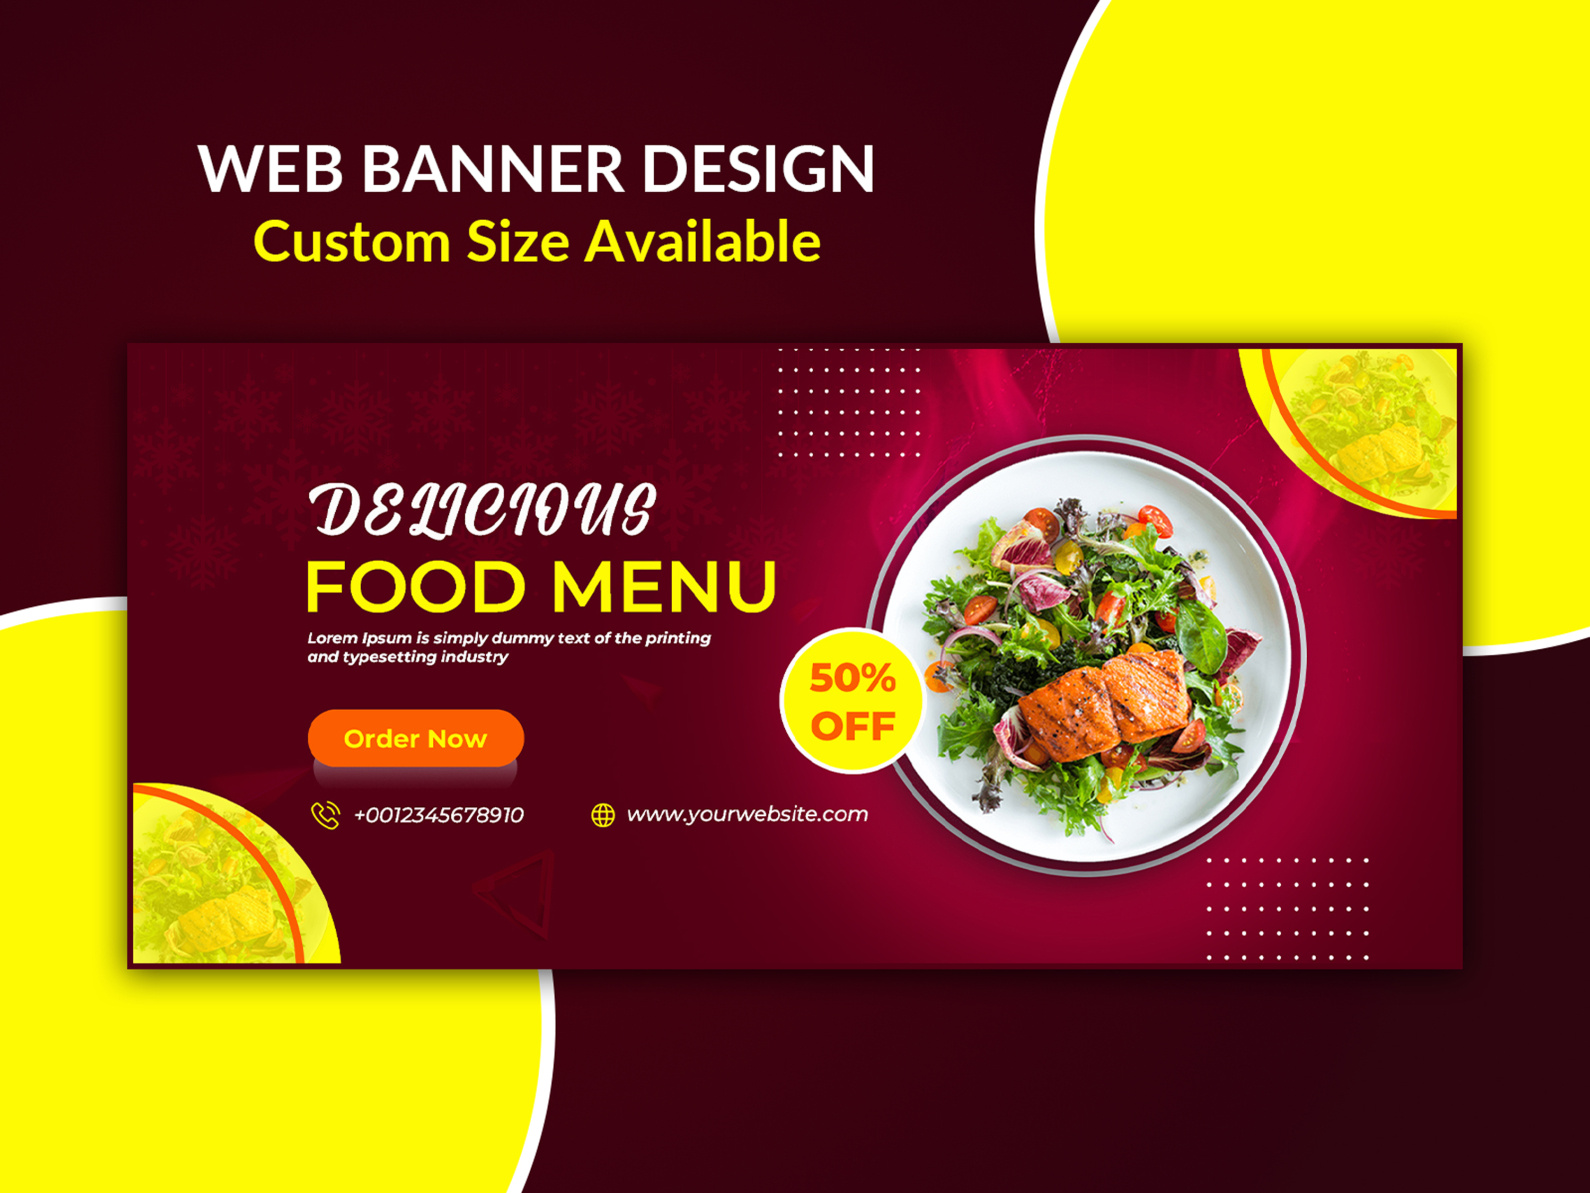 food-web-banner-design-by-gfx-sabina-on-dribbble